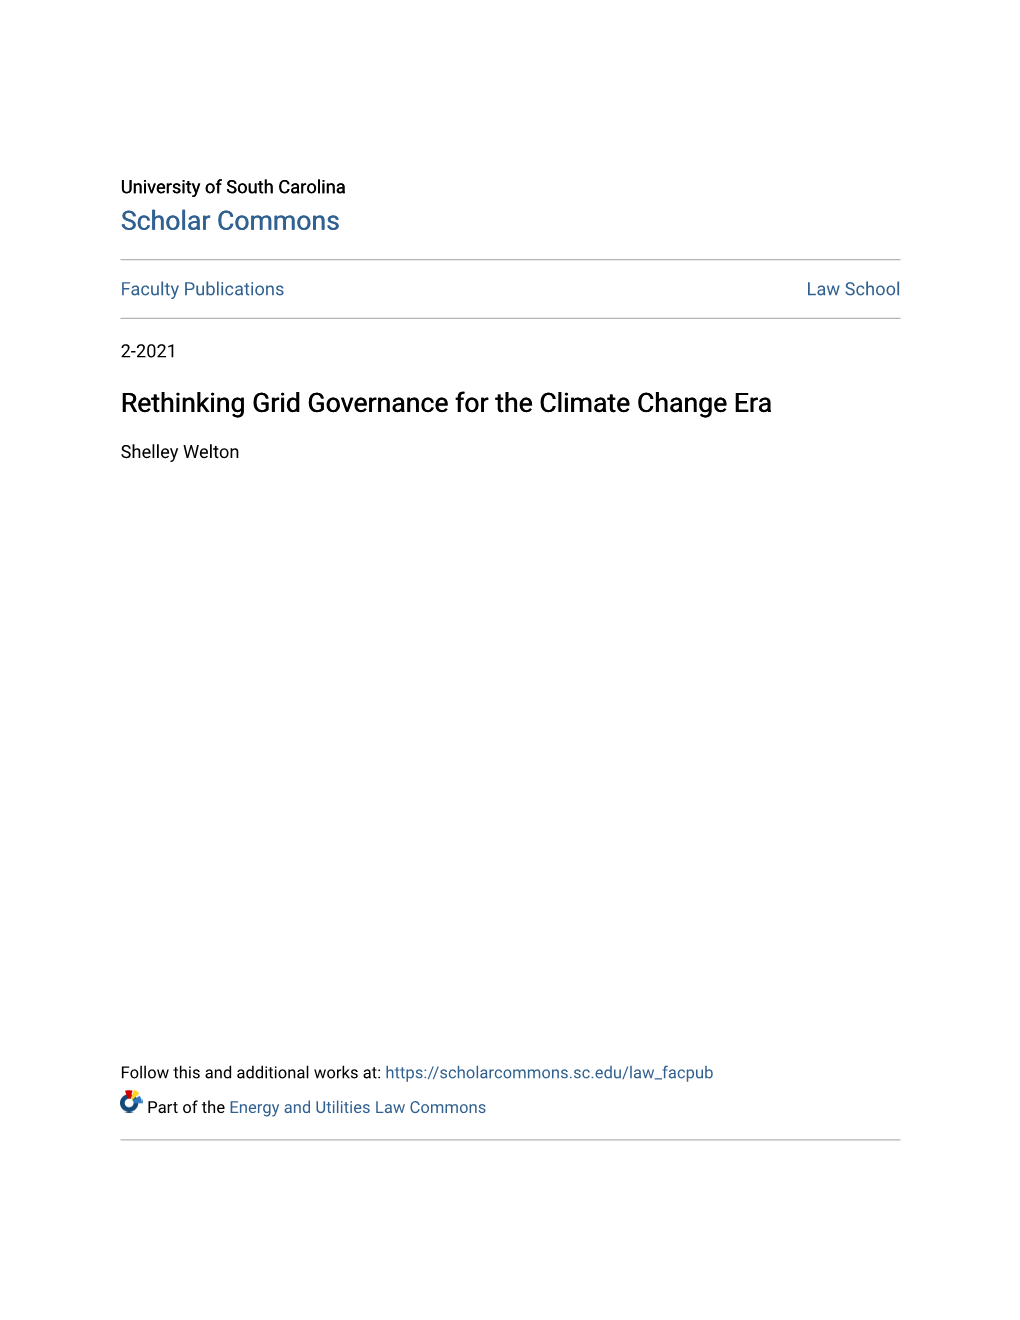 Rethinking Grid Governance for the Climate Change Era